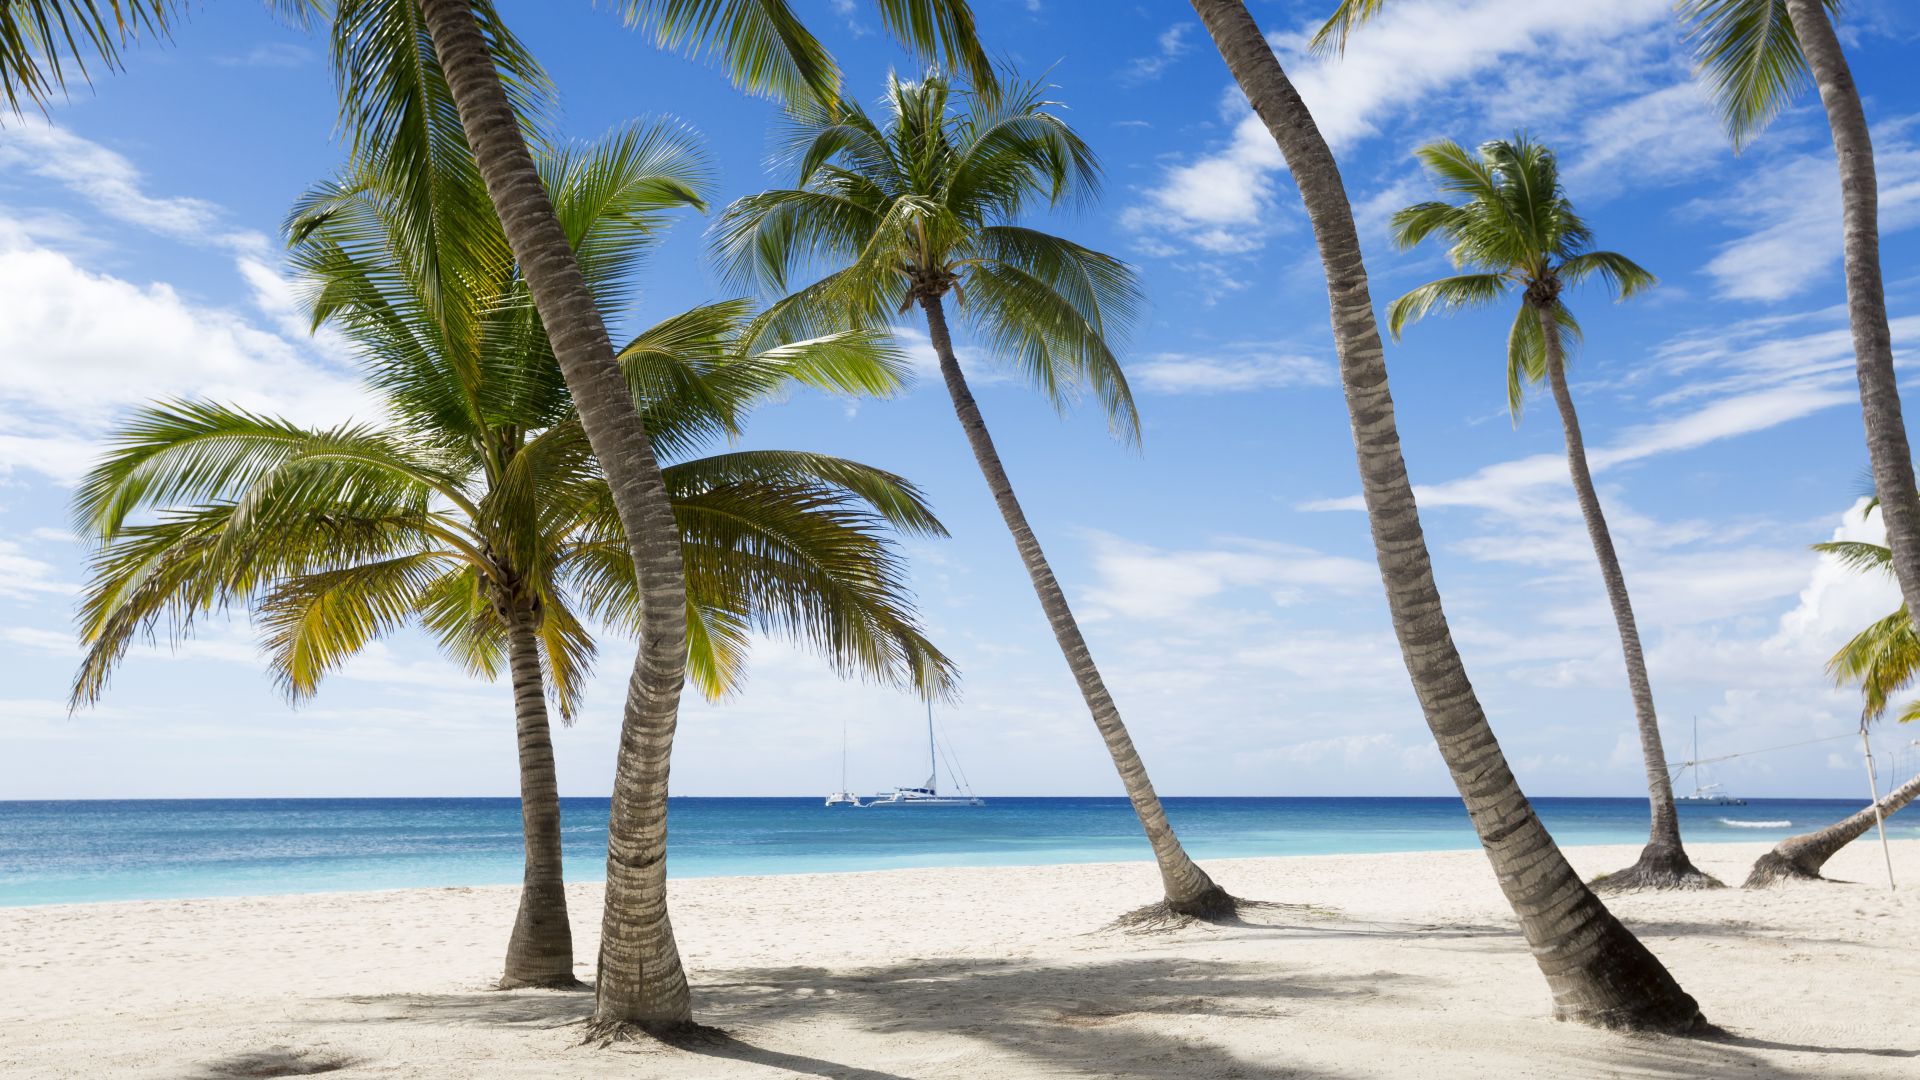 Ямайка, 5k, 4k, Карибы, пляж, пальмы, небо, путешествия, туризм, Jamaika, 5k, 4k wallpaper, The Caribbean, beach, palms, sky, travel, tourism (horizontal)